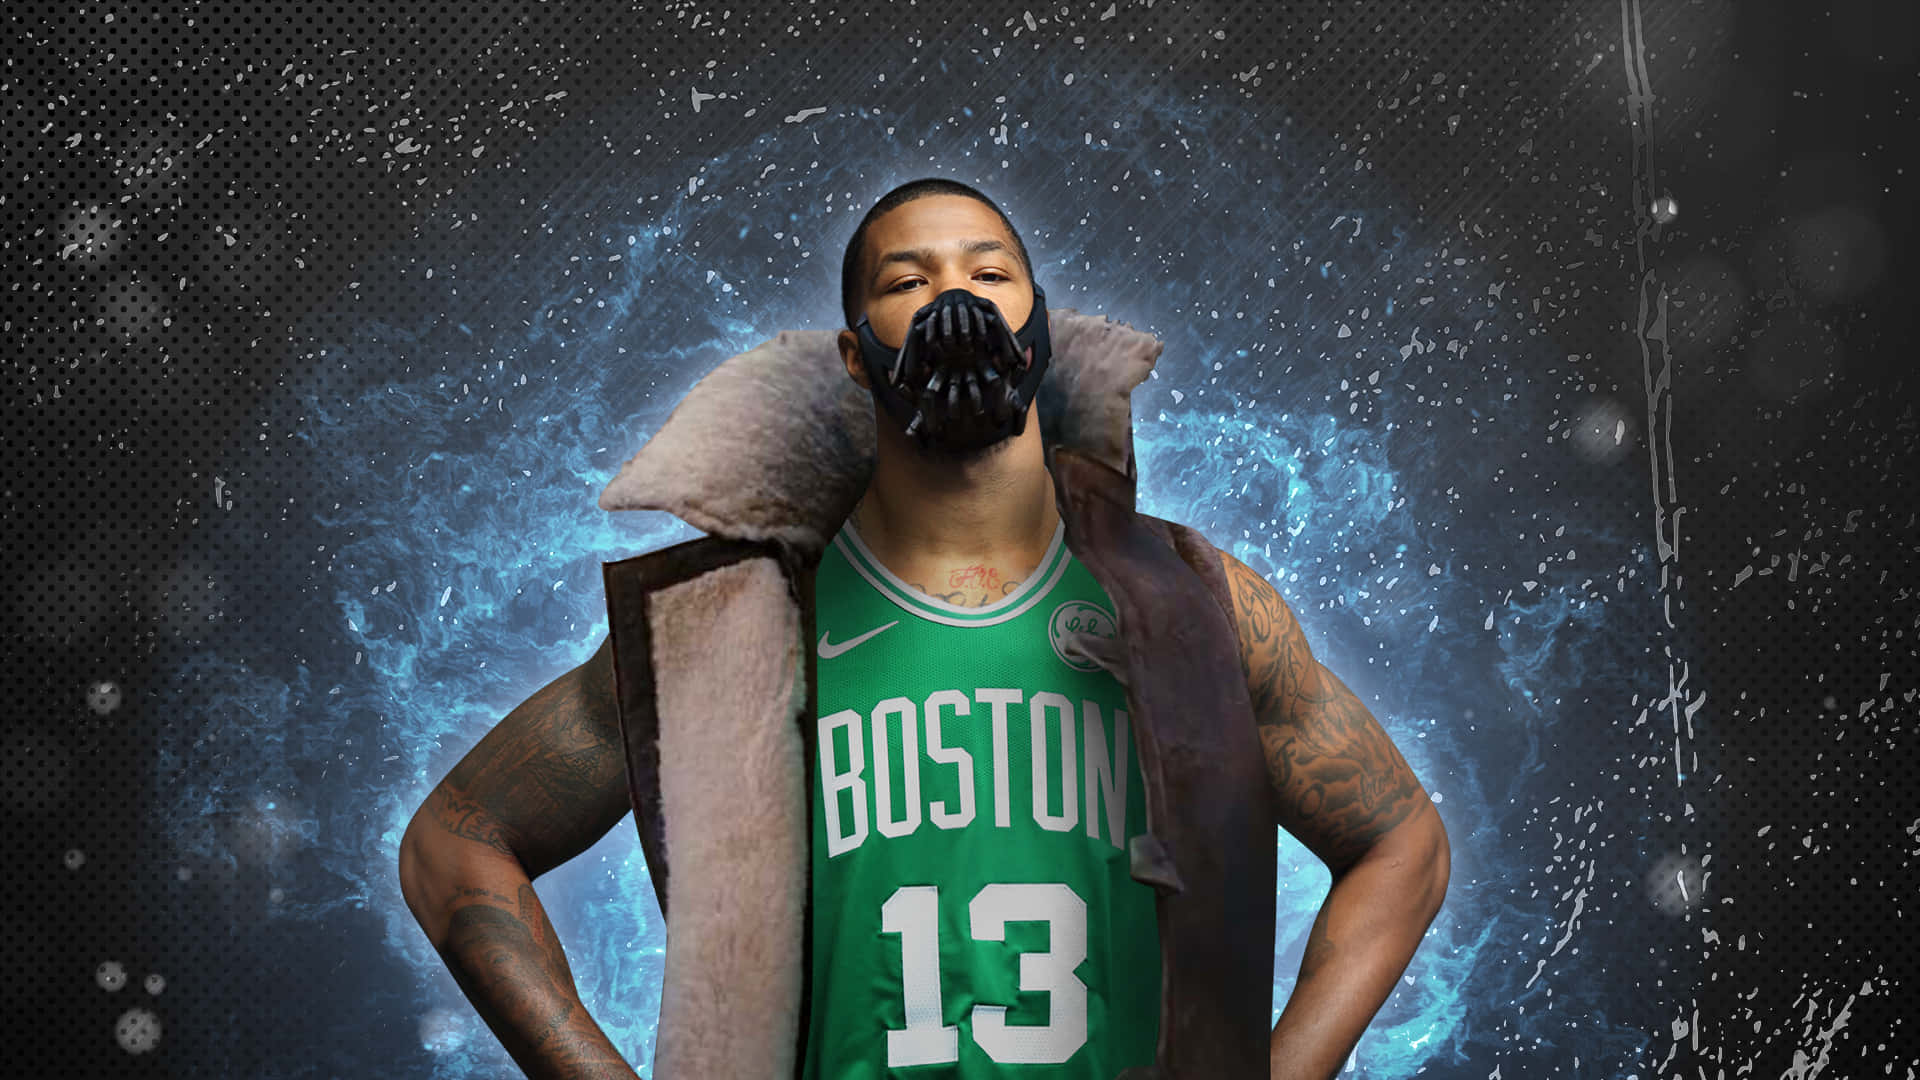 Boston Celtics Marcus Morris Galaxy Fanart Wallpaper